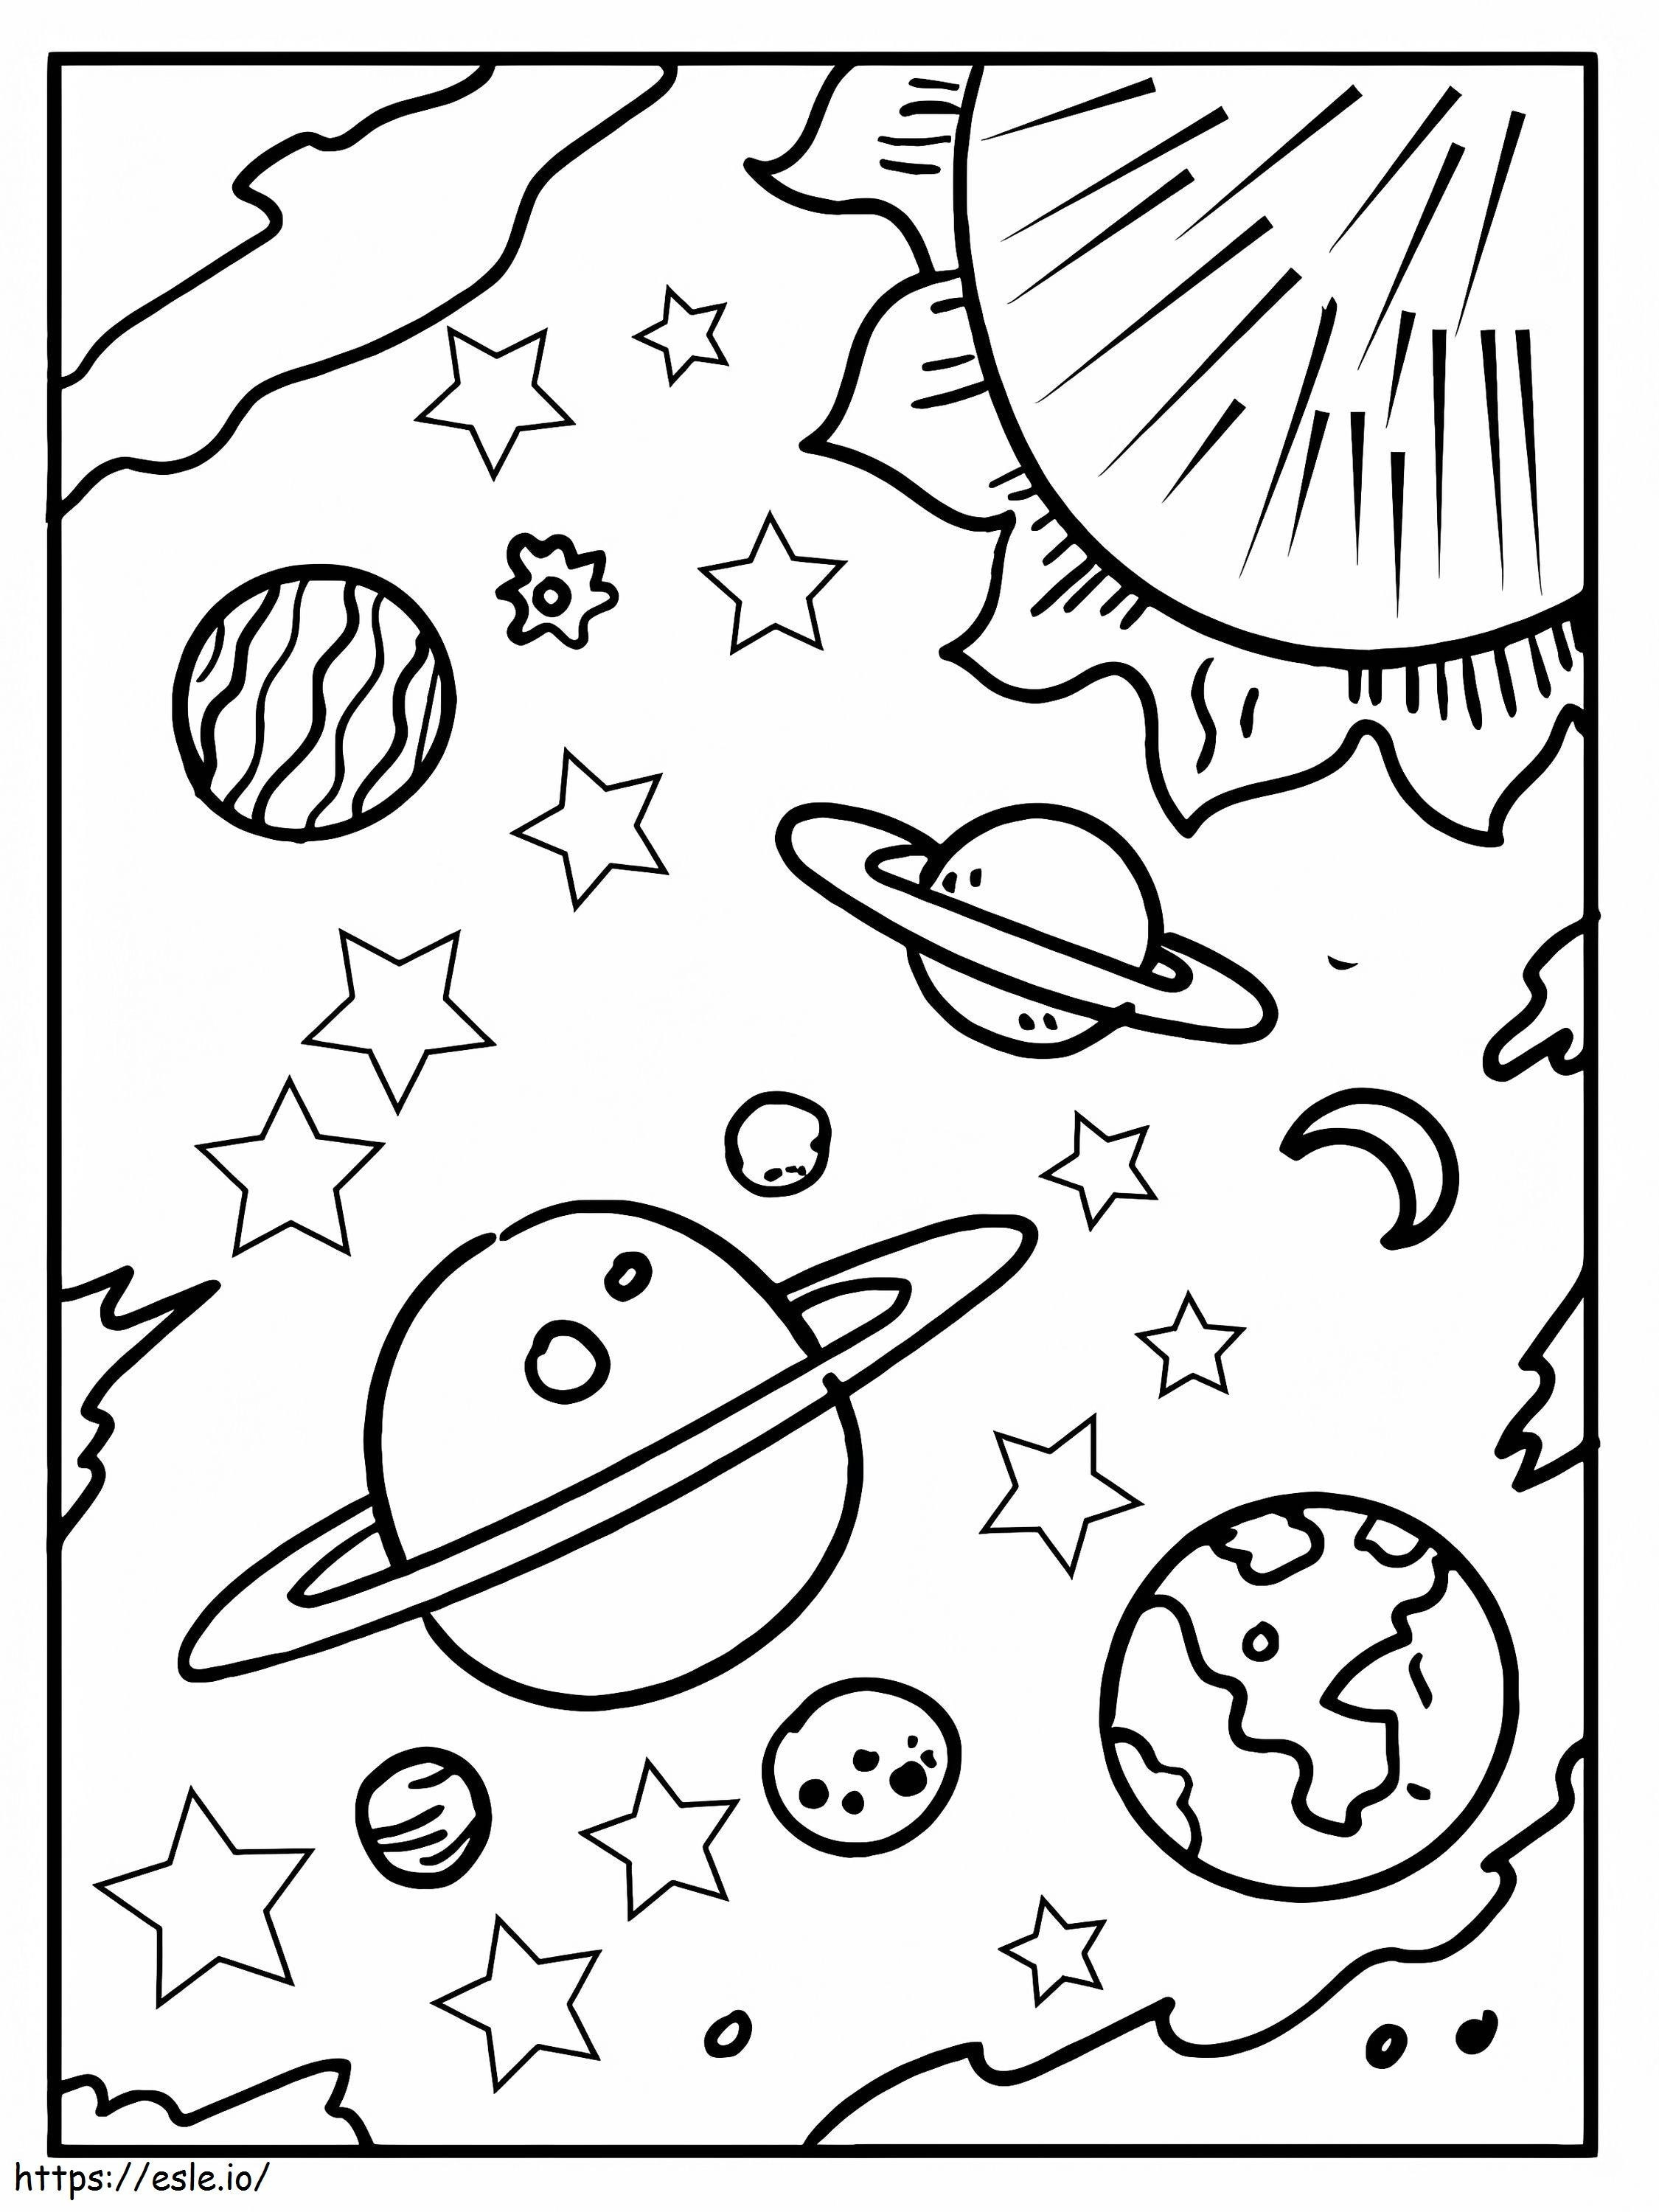 Planetas e estrelas para colorir